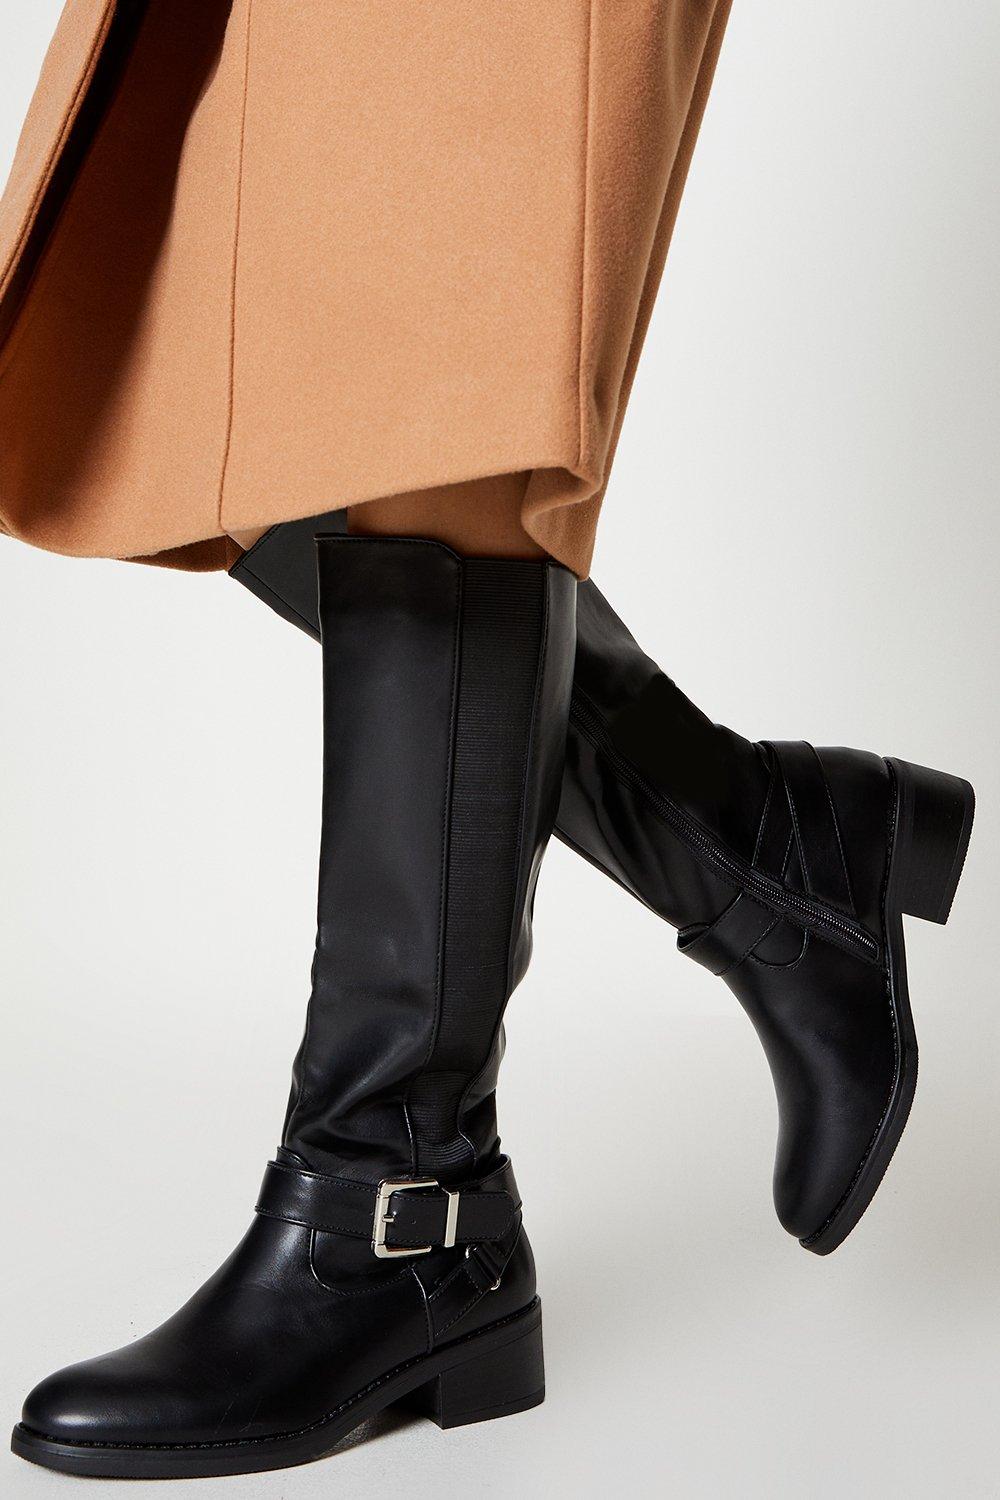 Women's Kendra Knee High Buckle Boots - black - 8